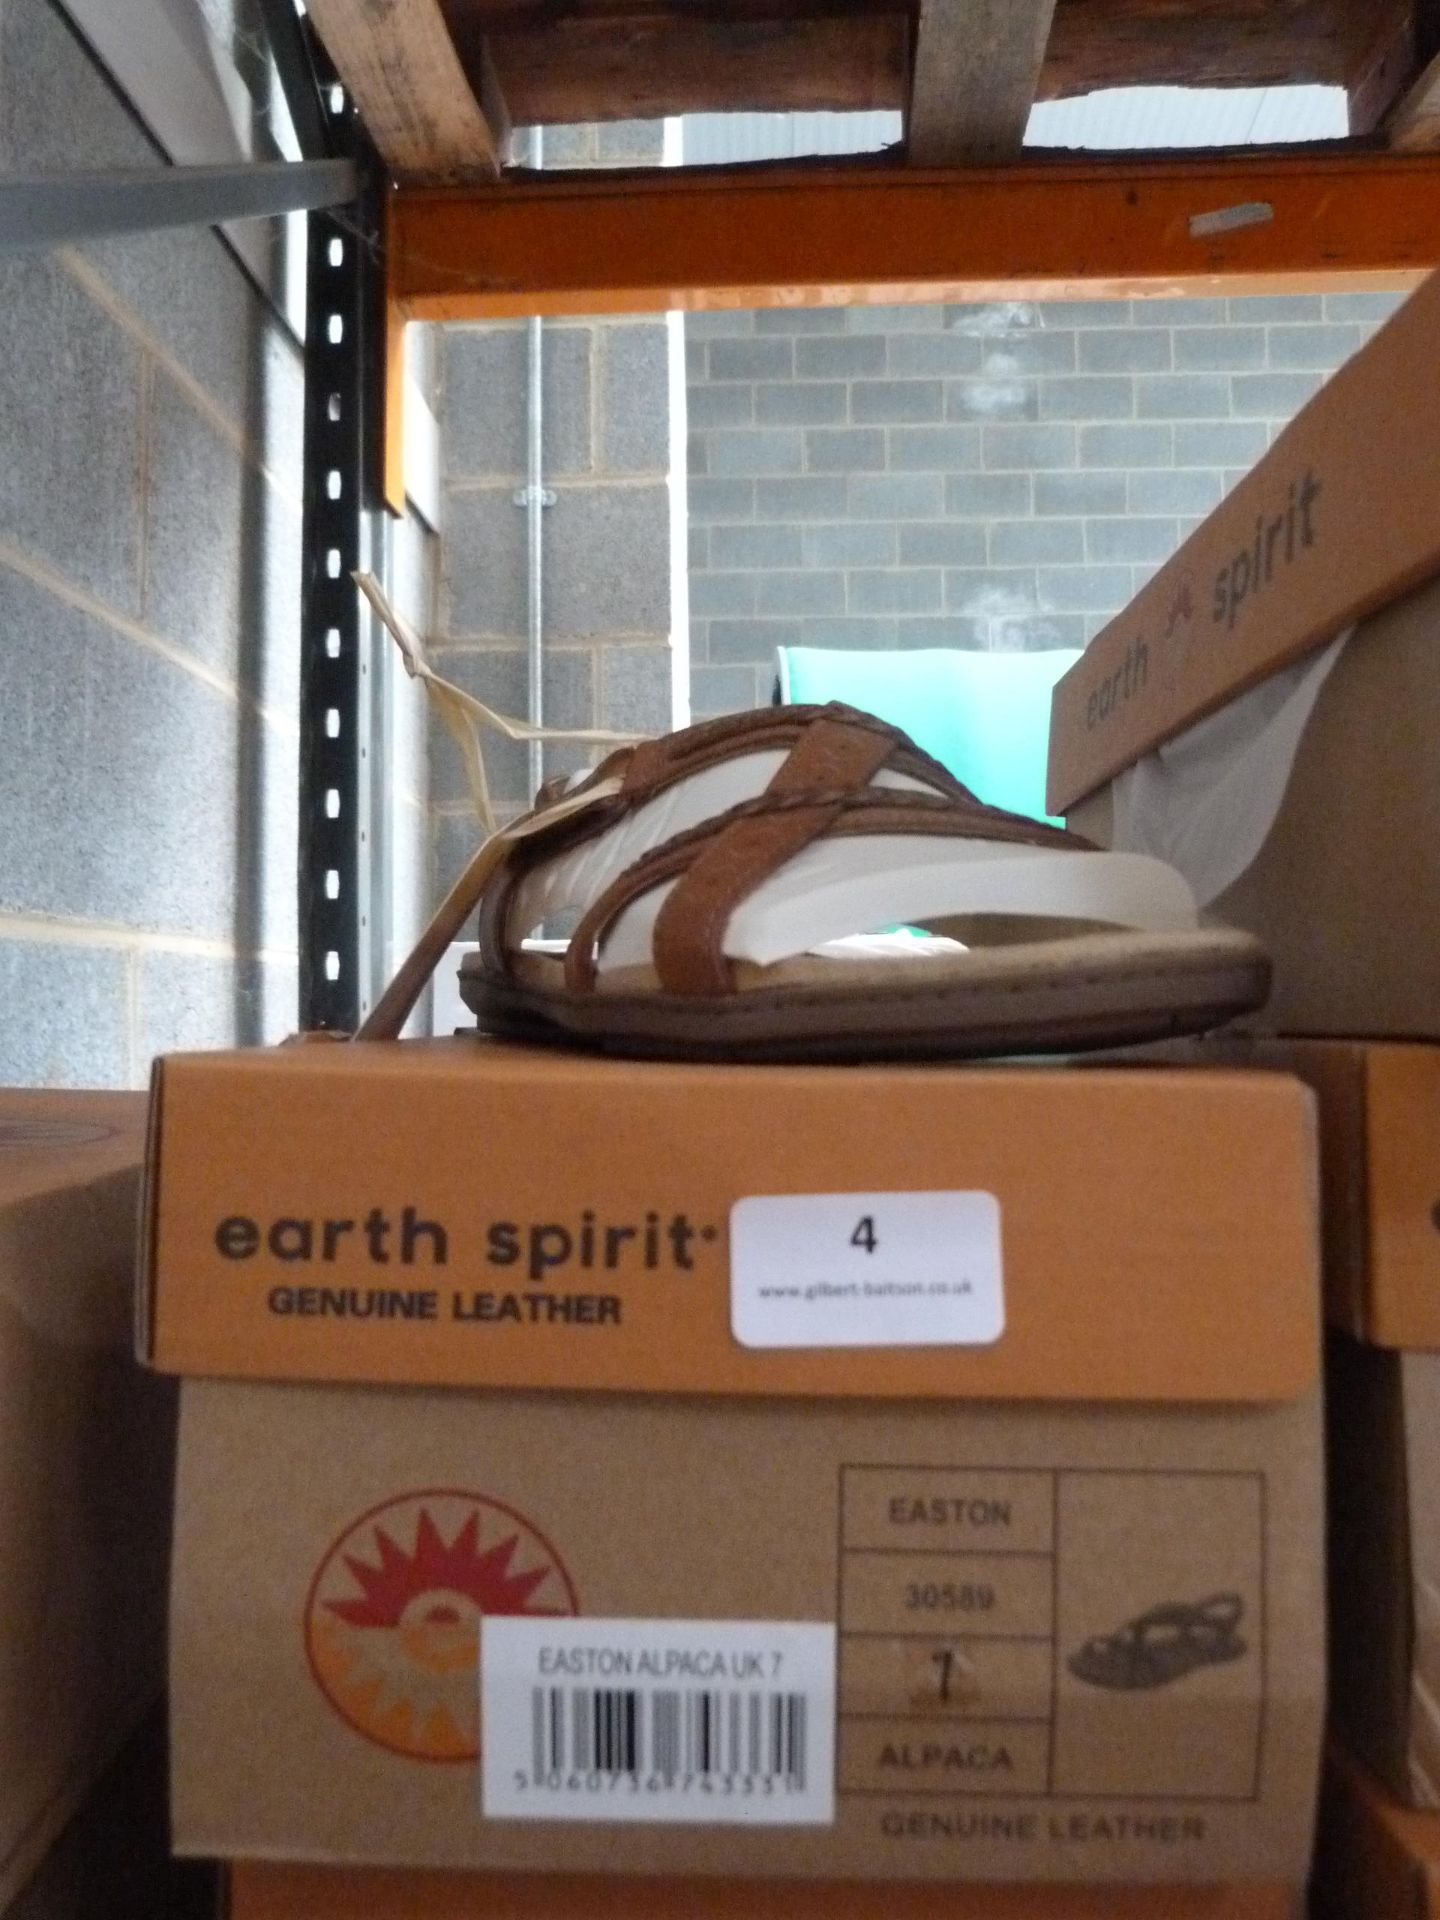 *Earth Spirit Genuine Leather Eastern Shoes (alpac